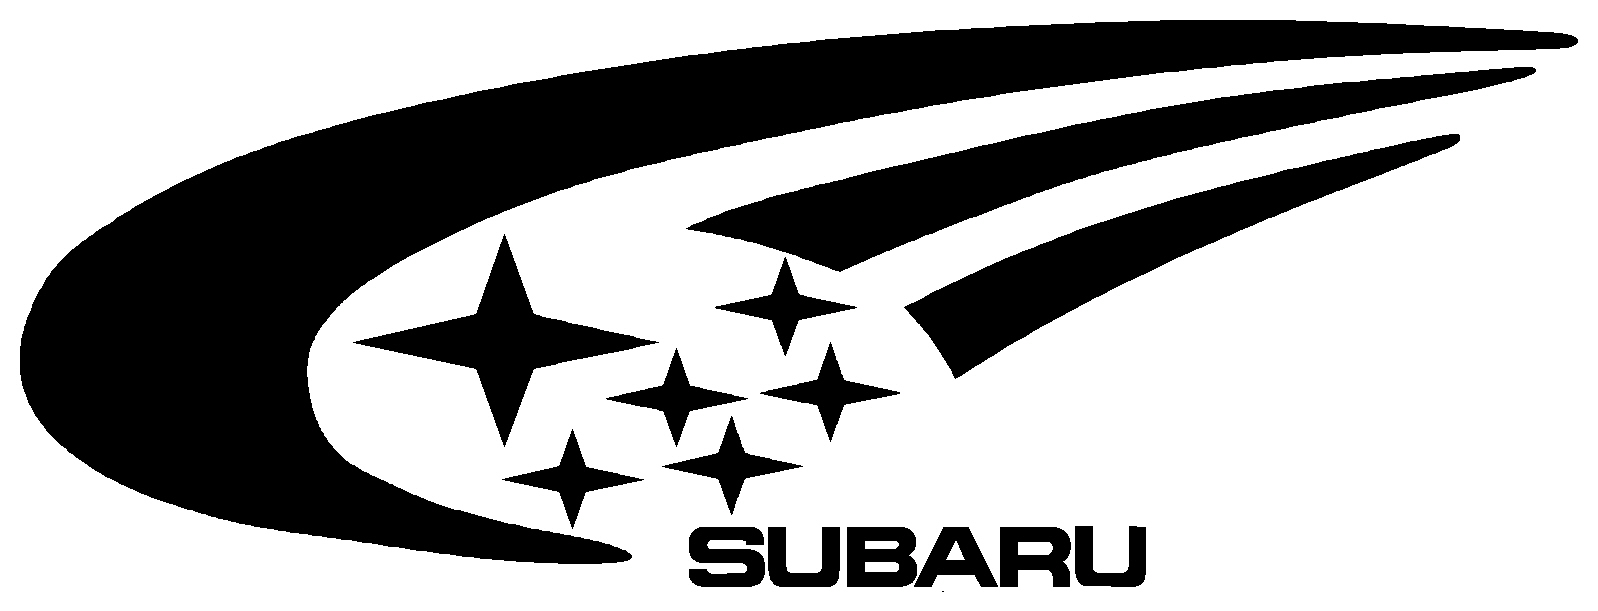 Subaru Stars Logo - Subaru star Logos